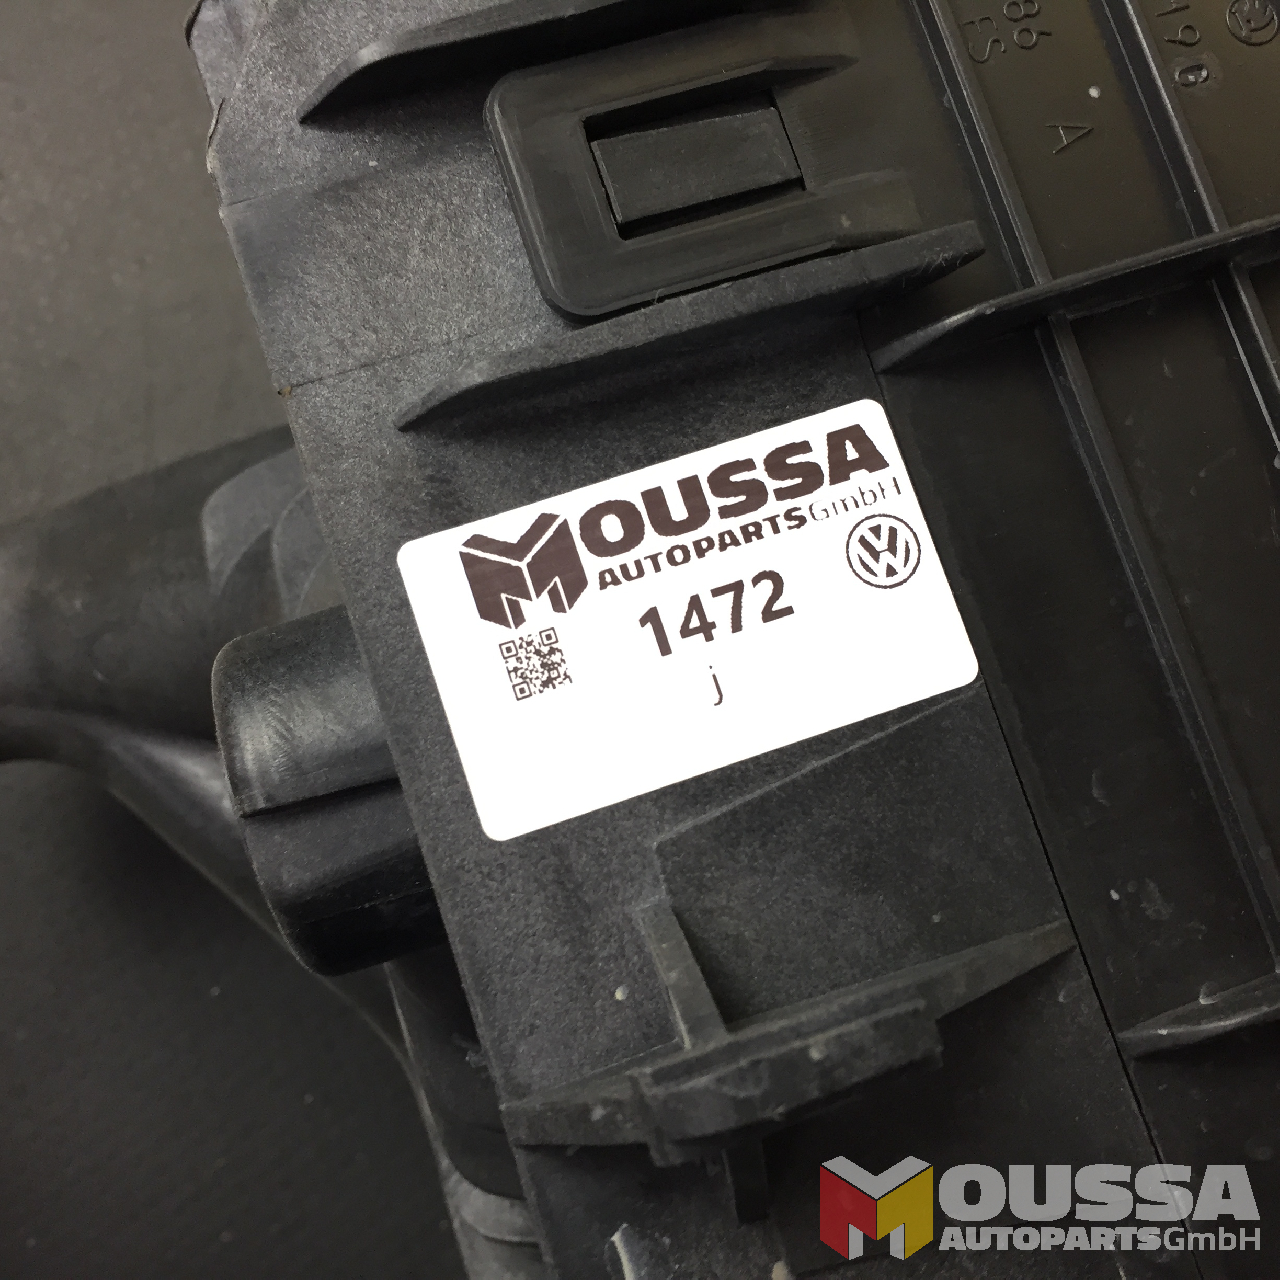 MOUSSA-AUTOPARTS-64a3deee8d815.jpg